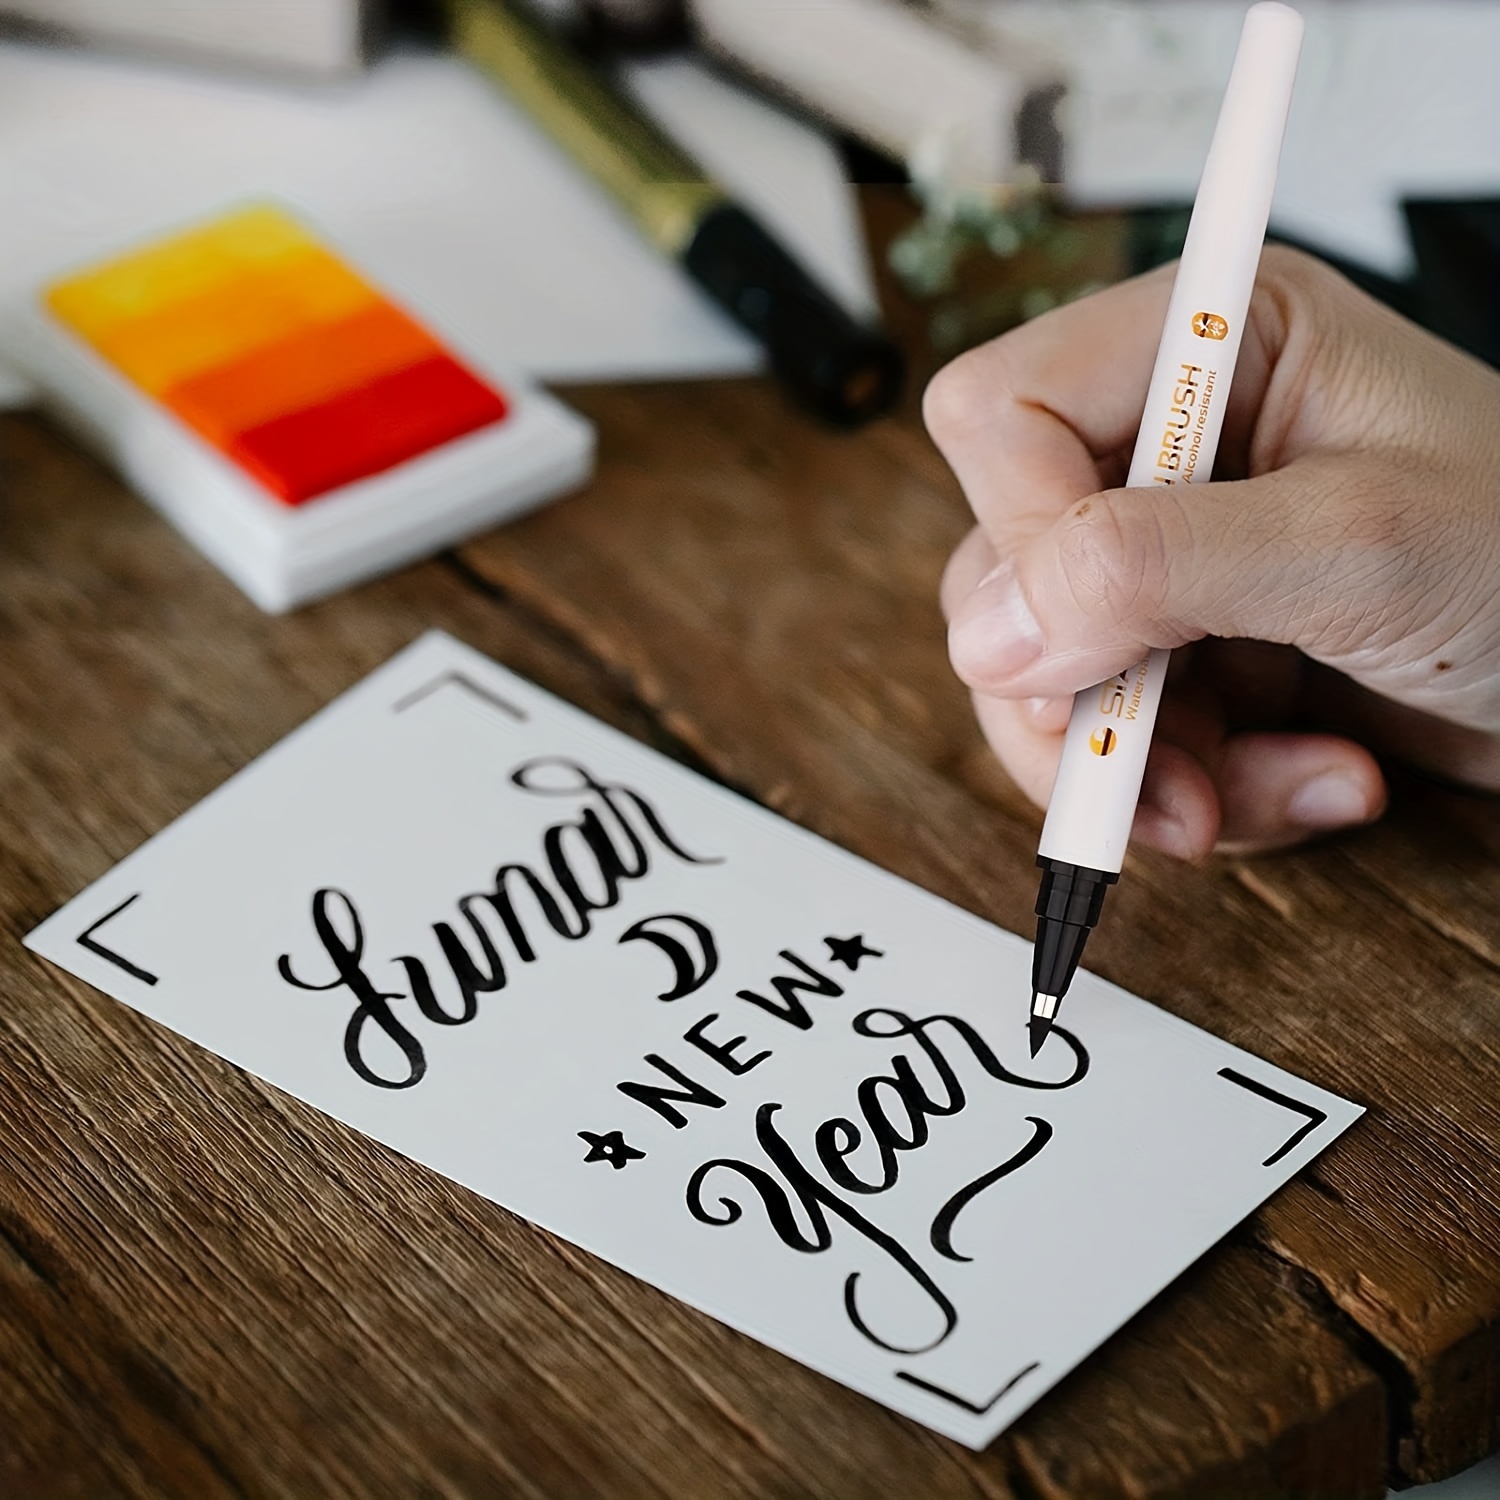 Calligraphy Black Brush Pens Beginners Lettering Marker Art Drawing  Scrapbooking